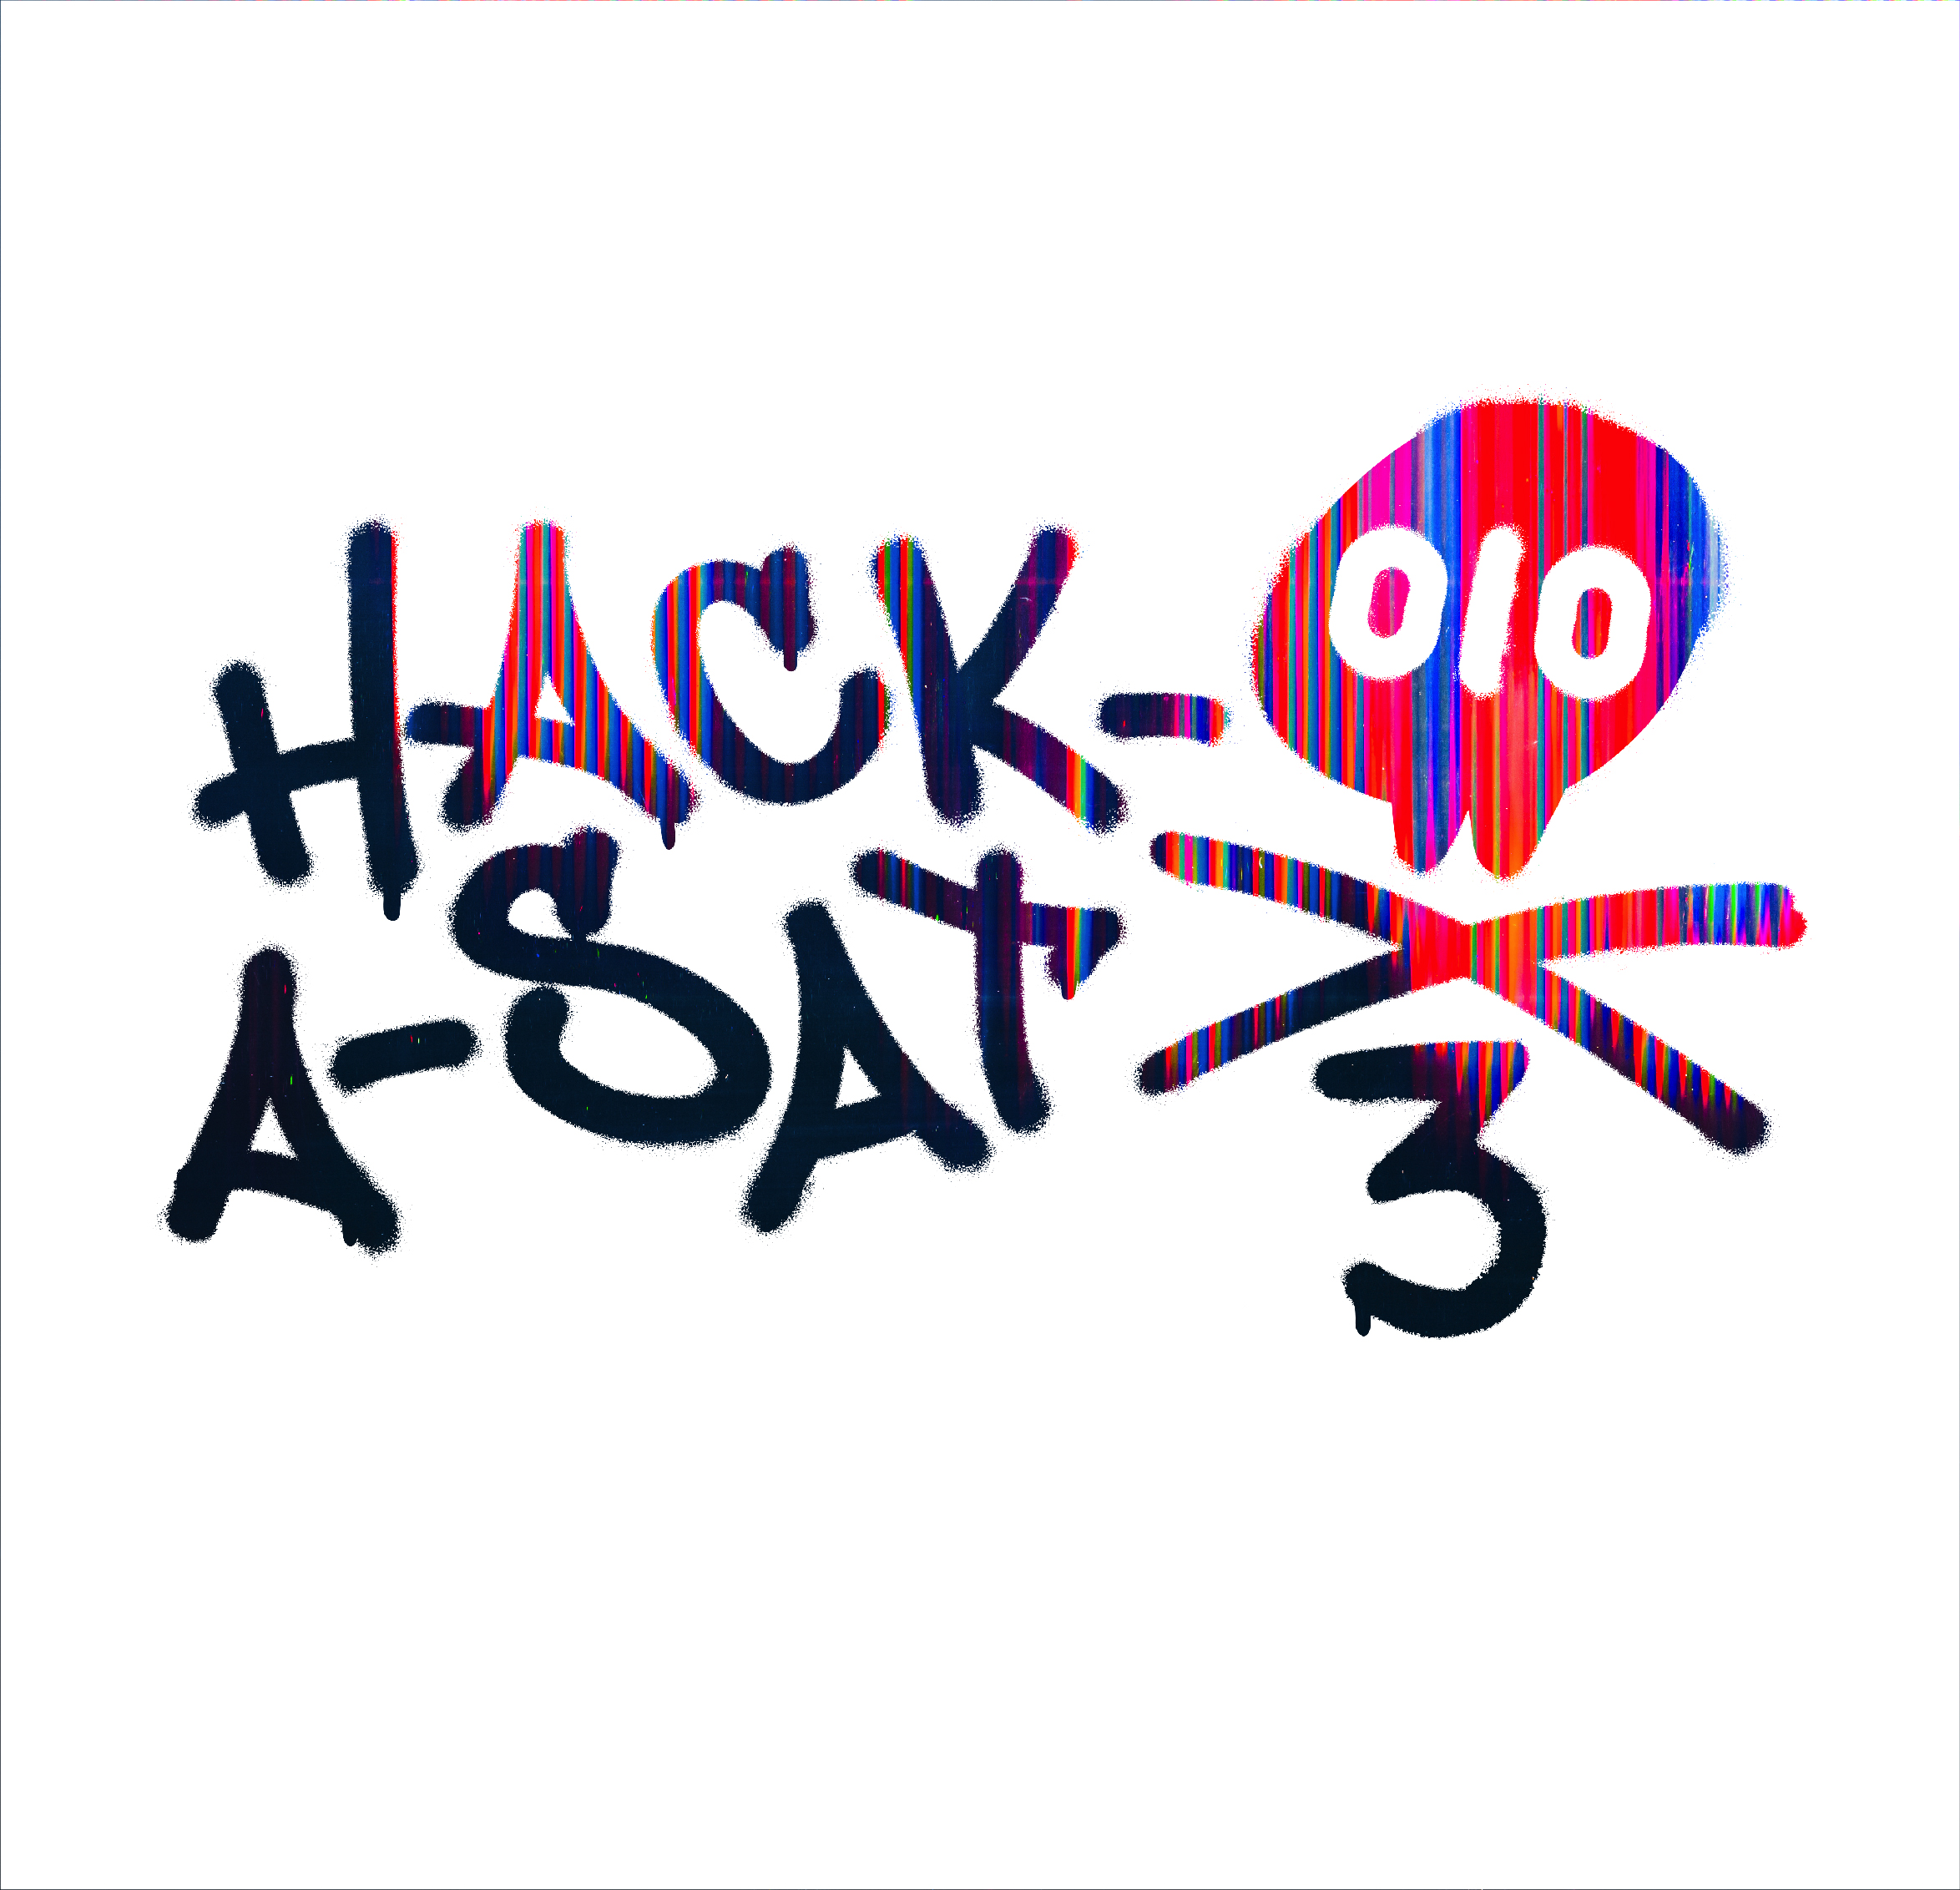 Hack-A-Sat 3 spray painted logo